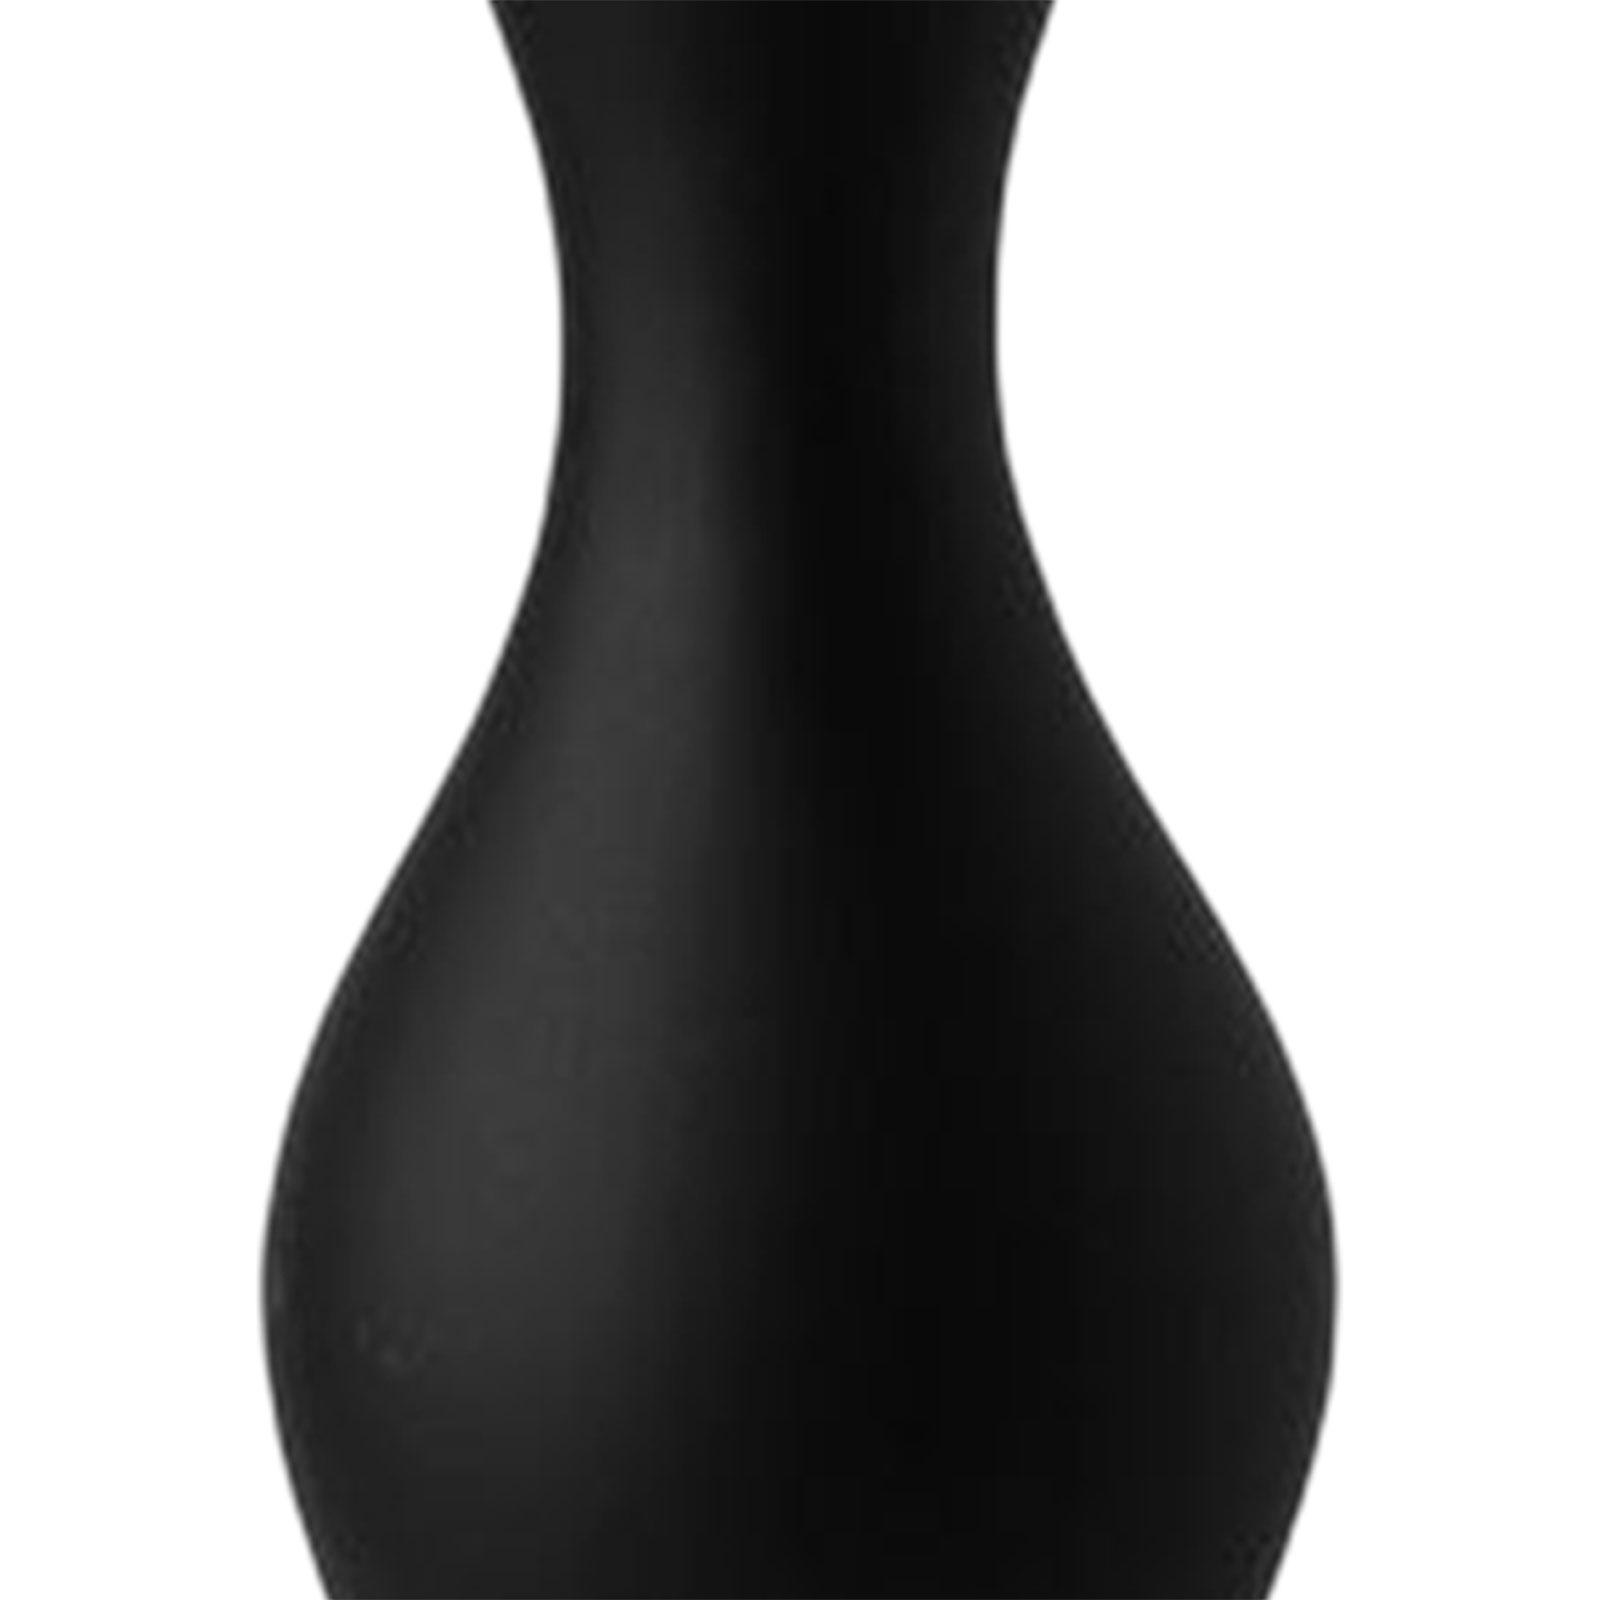 Ceramic Flower Vase Modern Minimalist Elegant for Home Decoration Adornment Black 9.5cmx26cm